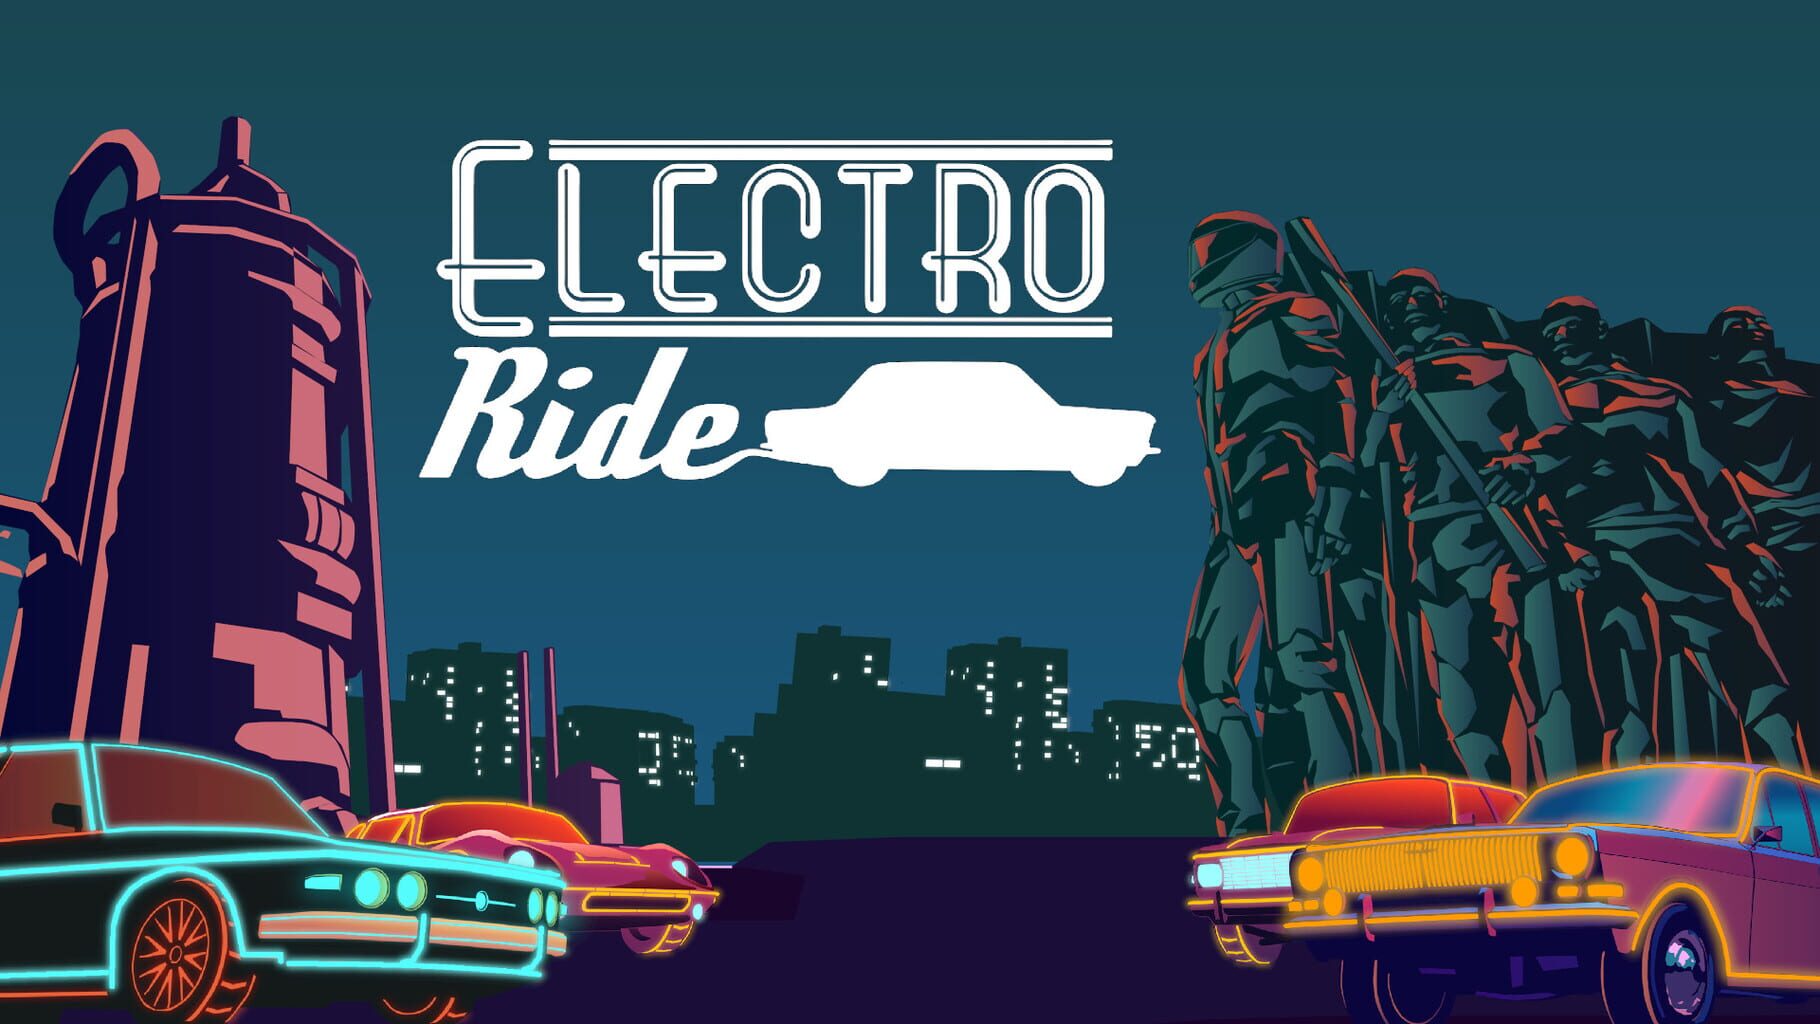 Electro Ride: The Neon Racing artwork